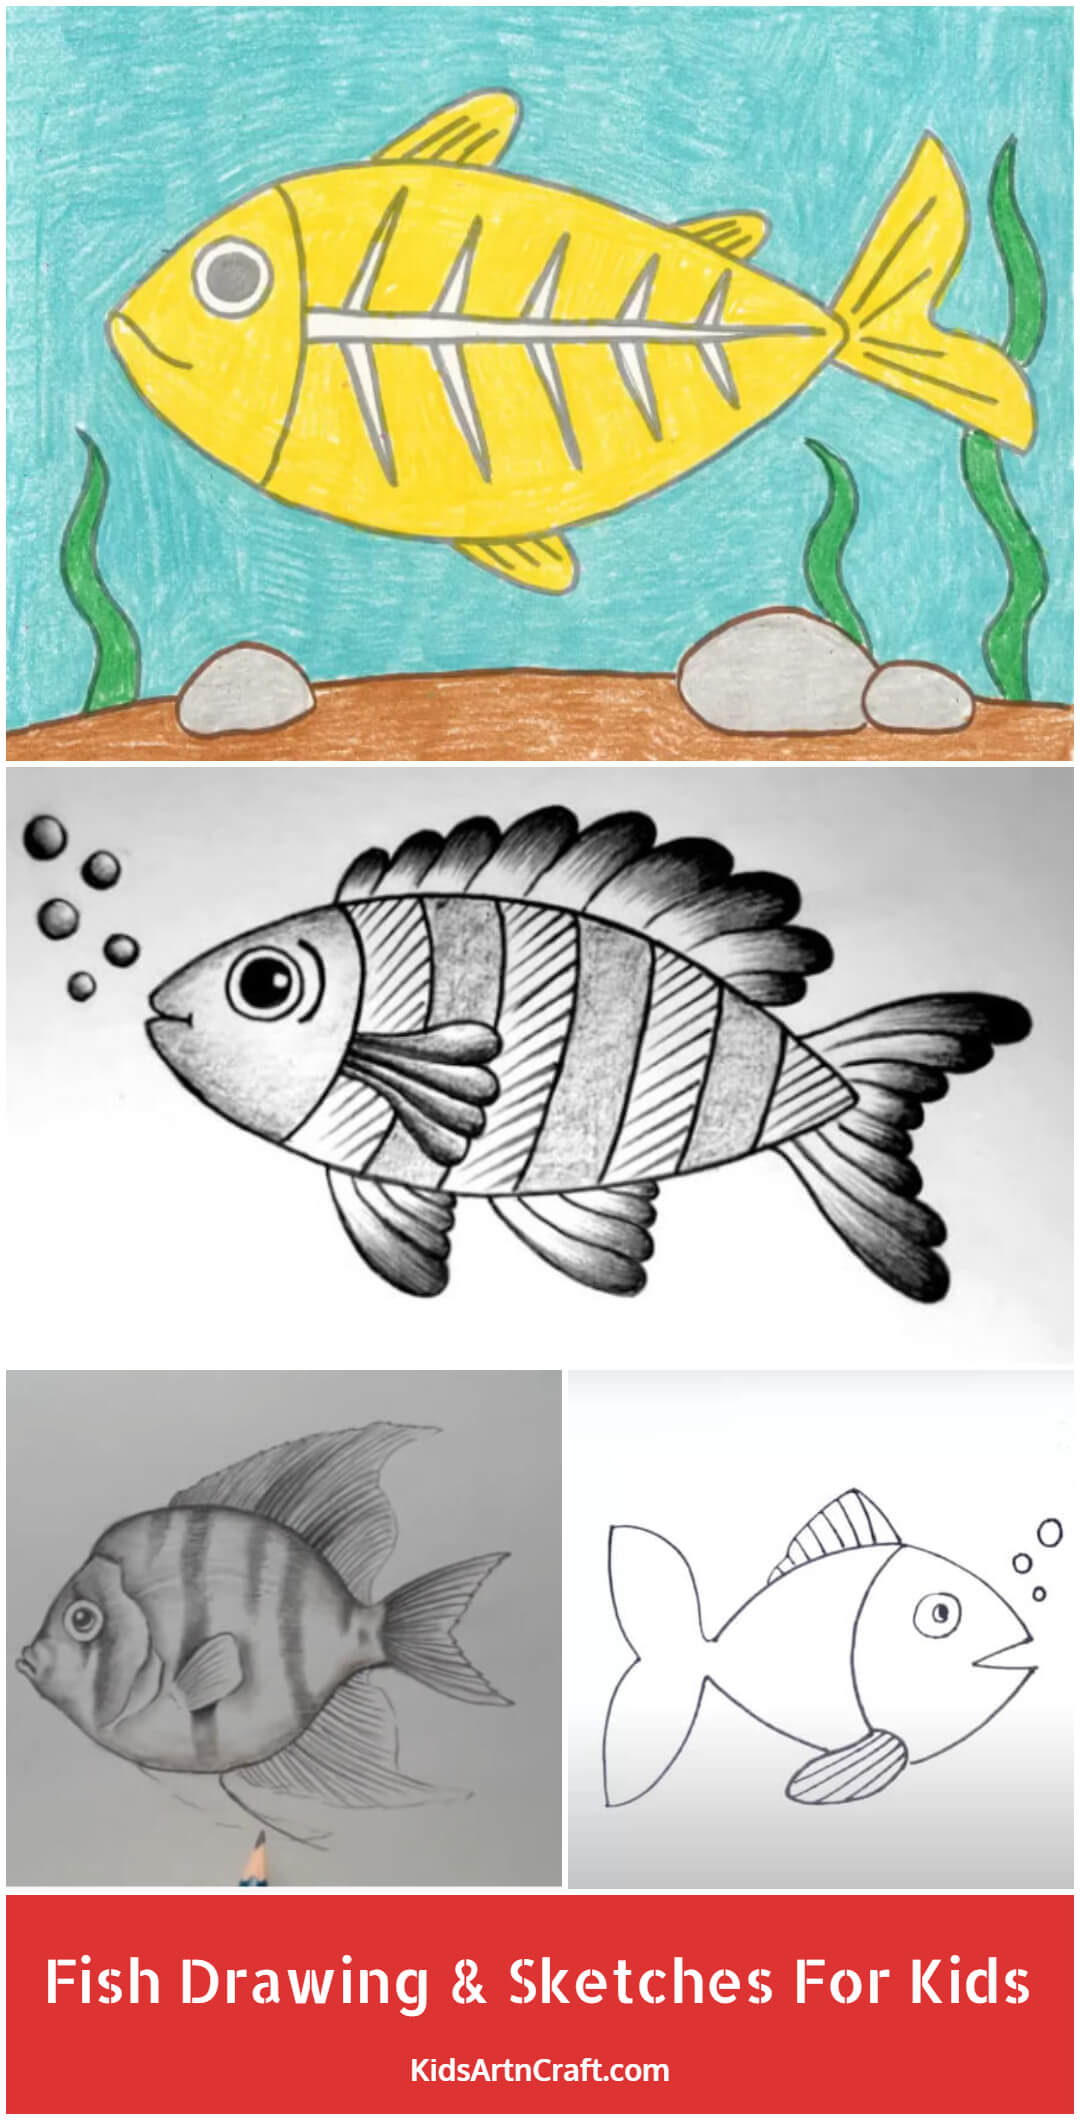 two fish drawing with sketch pen | Fish drawings, Drawings, Drawn fish